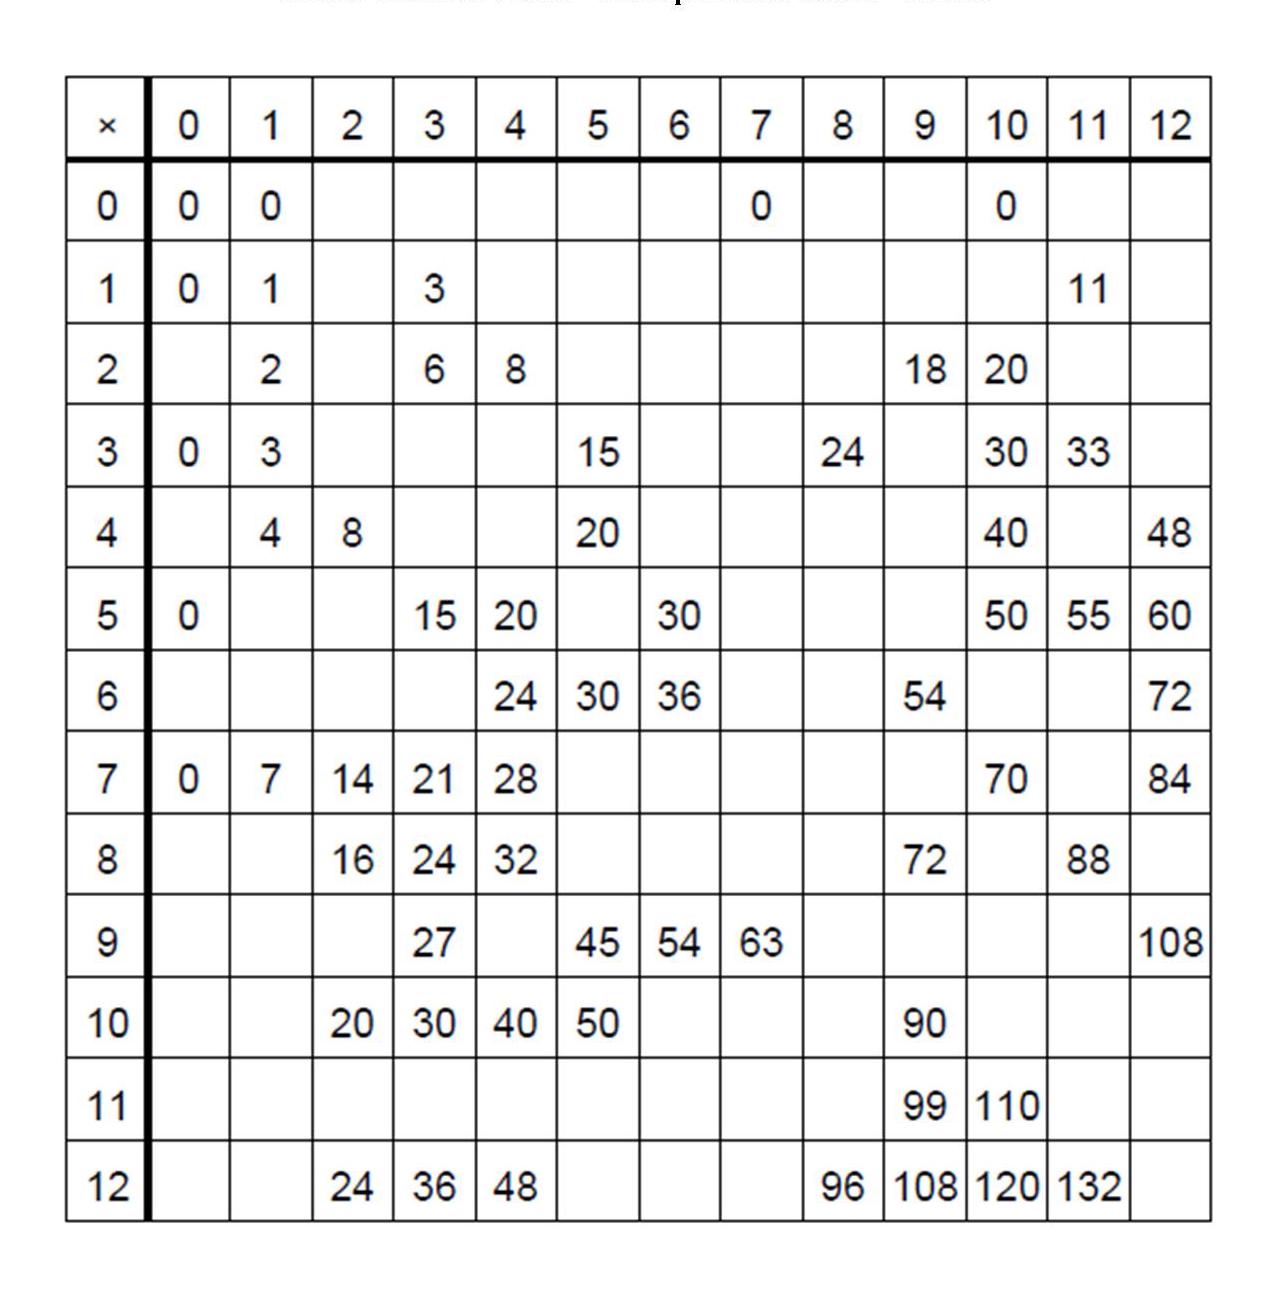 multiplication charts blank printable